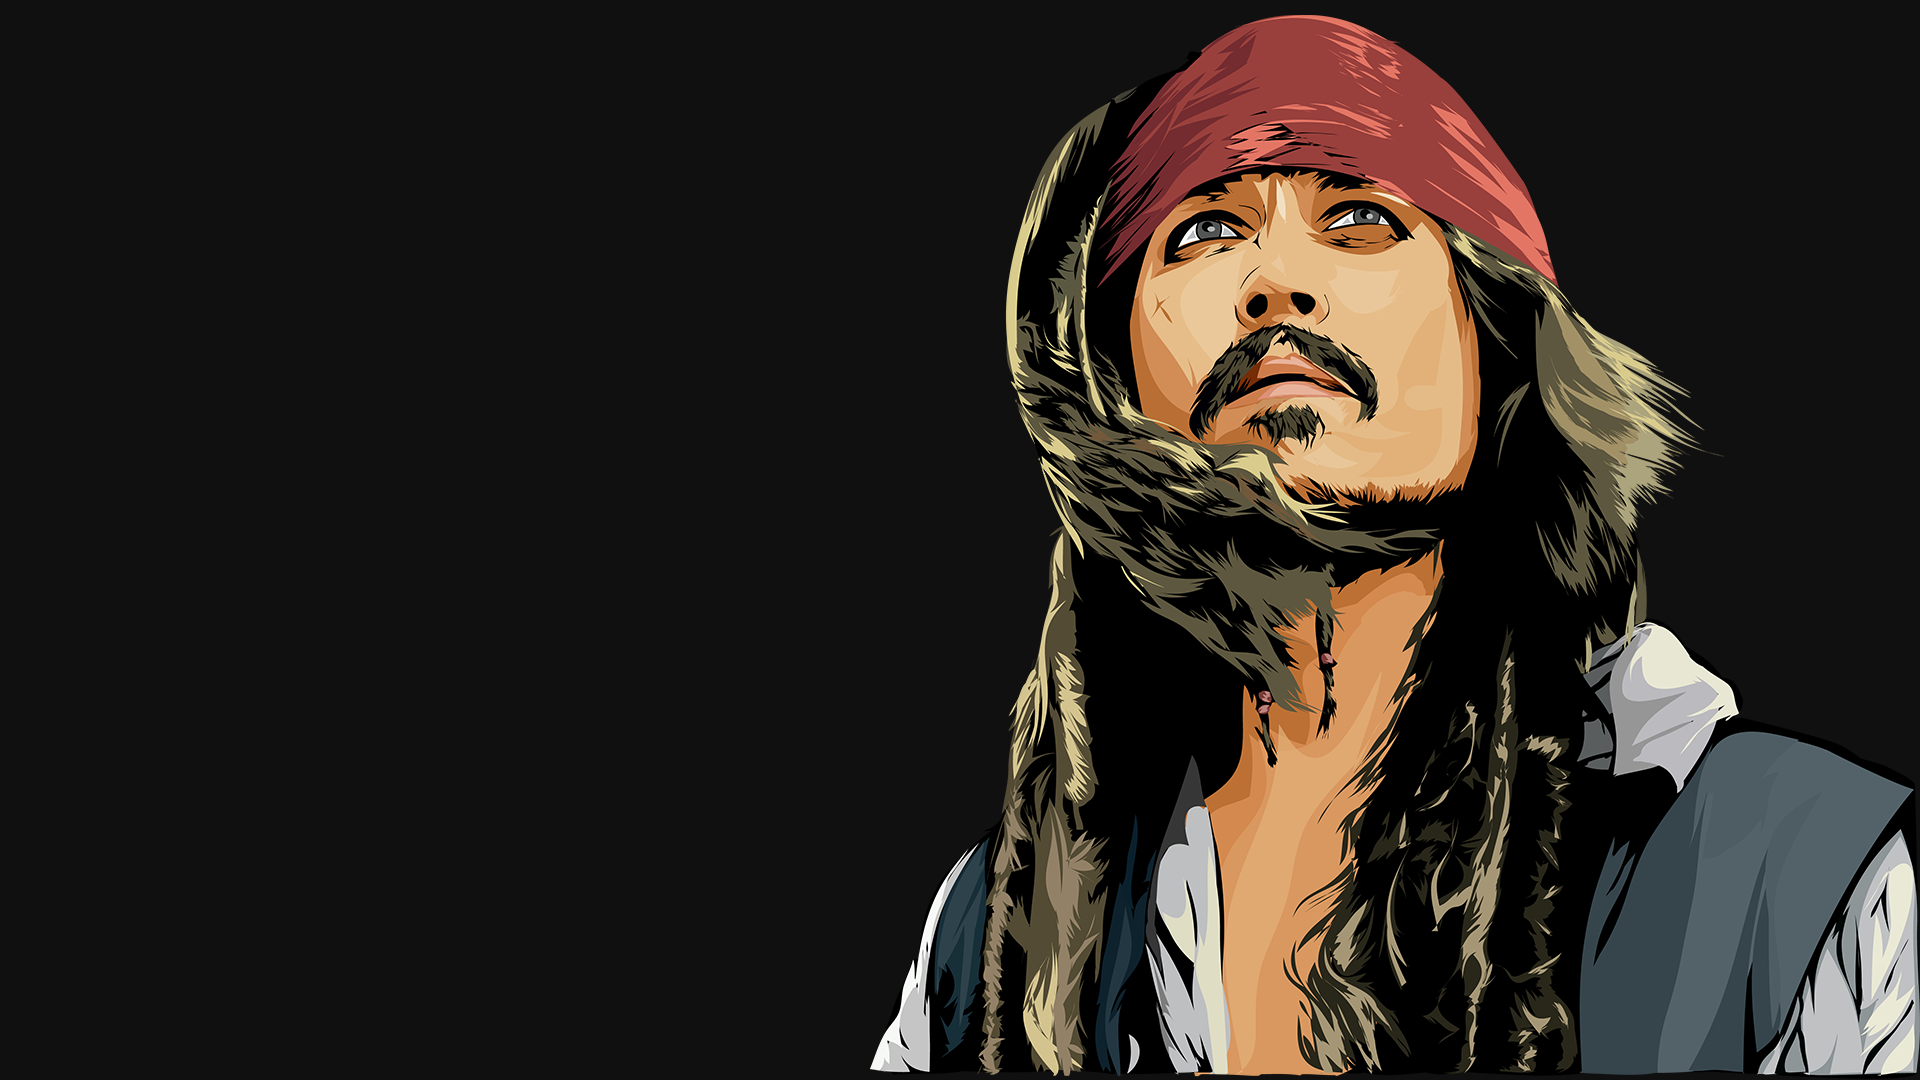 General 1920x1080 Jack Sparrow pirates Pirates of the Caribbean Pirates of the Caribbean: At World's End illusion illustration digital art